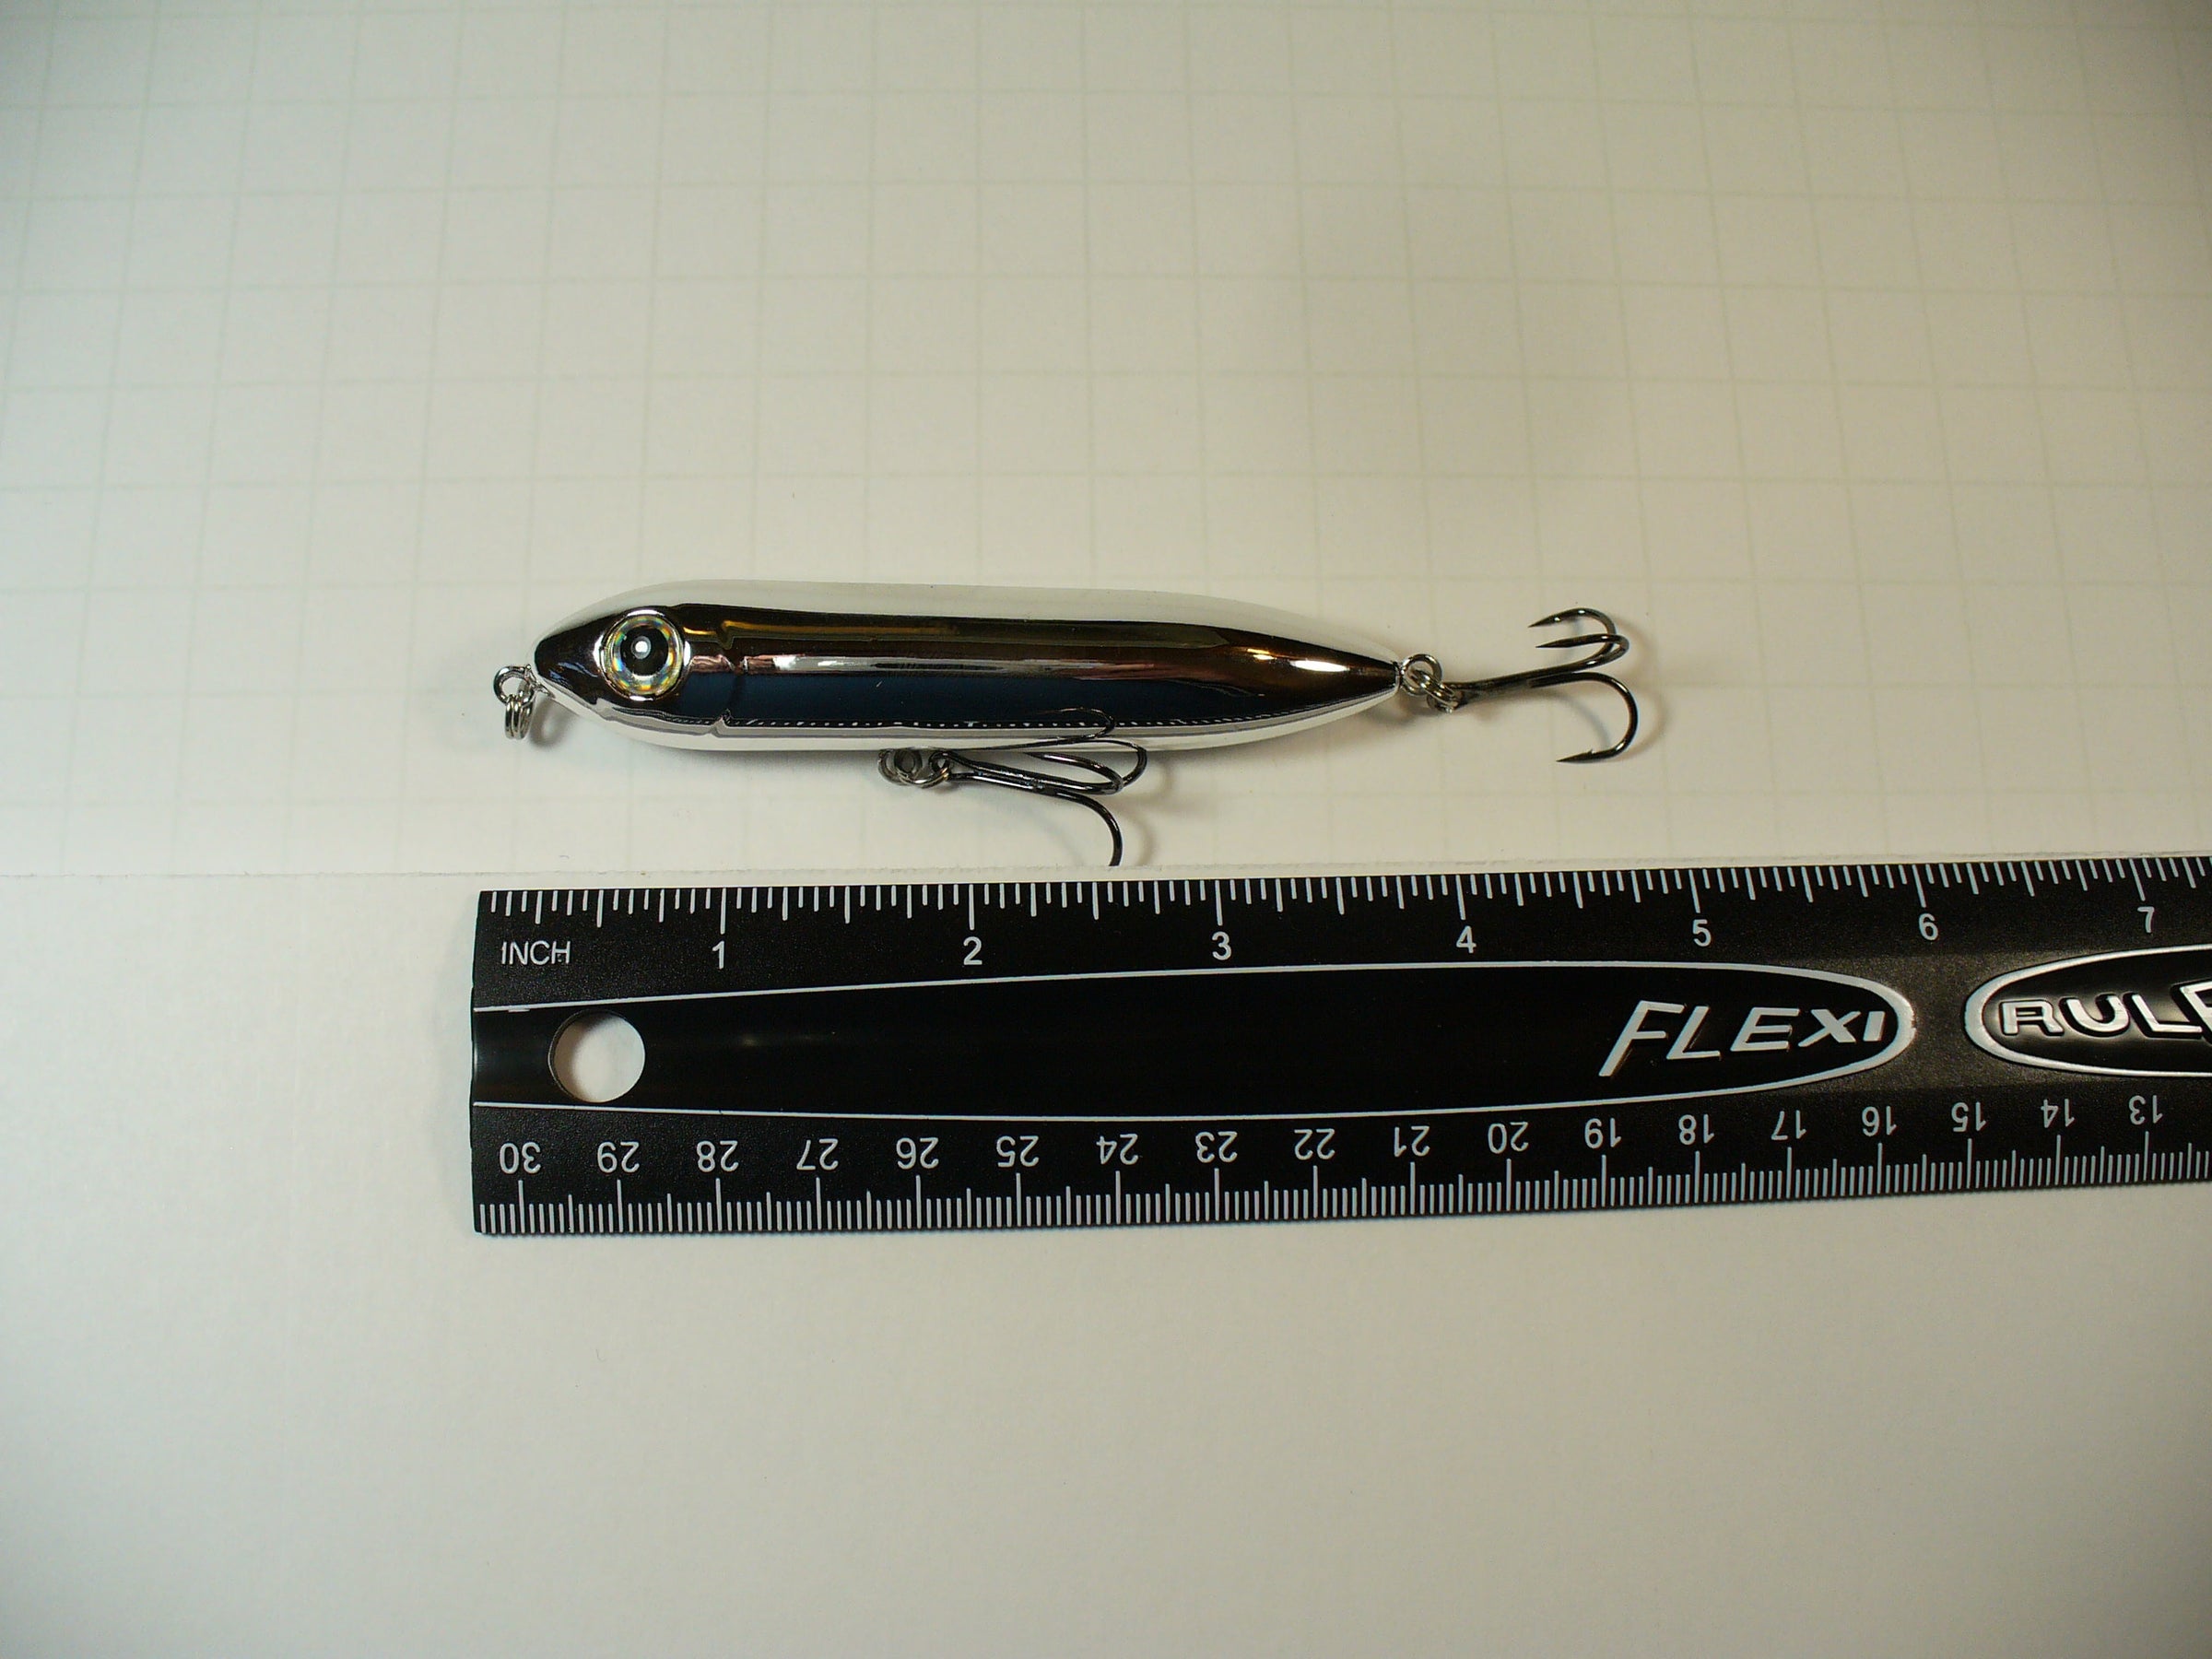 Stick baits and jigs - fishing lure research and development - Ryan Moody  Fishing